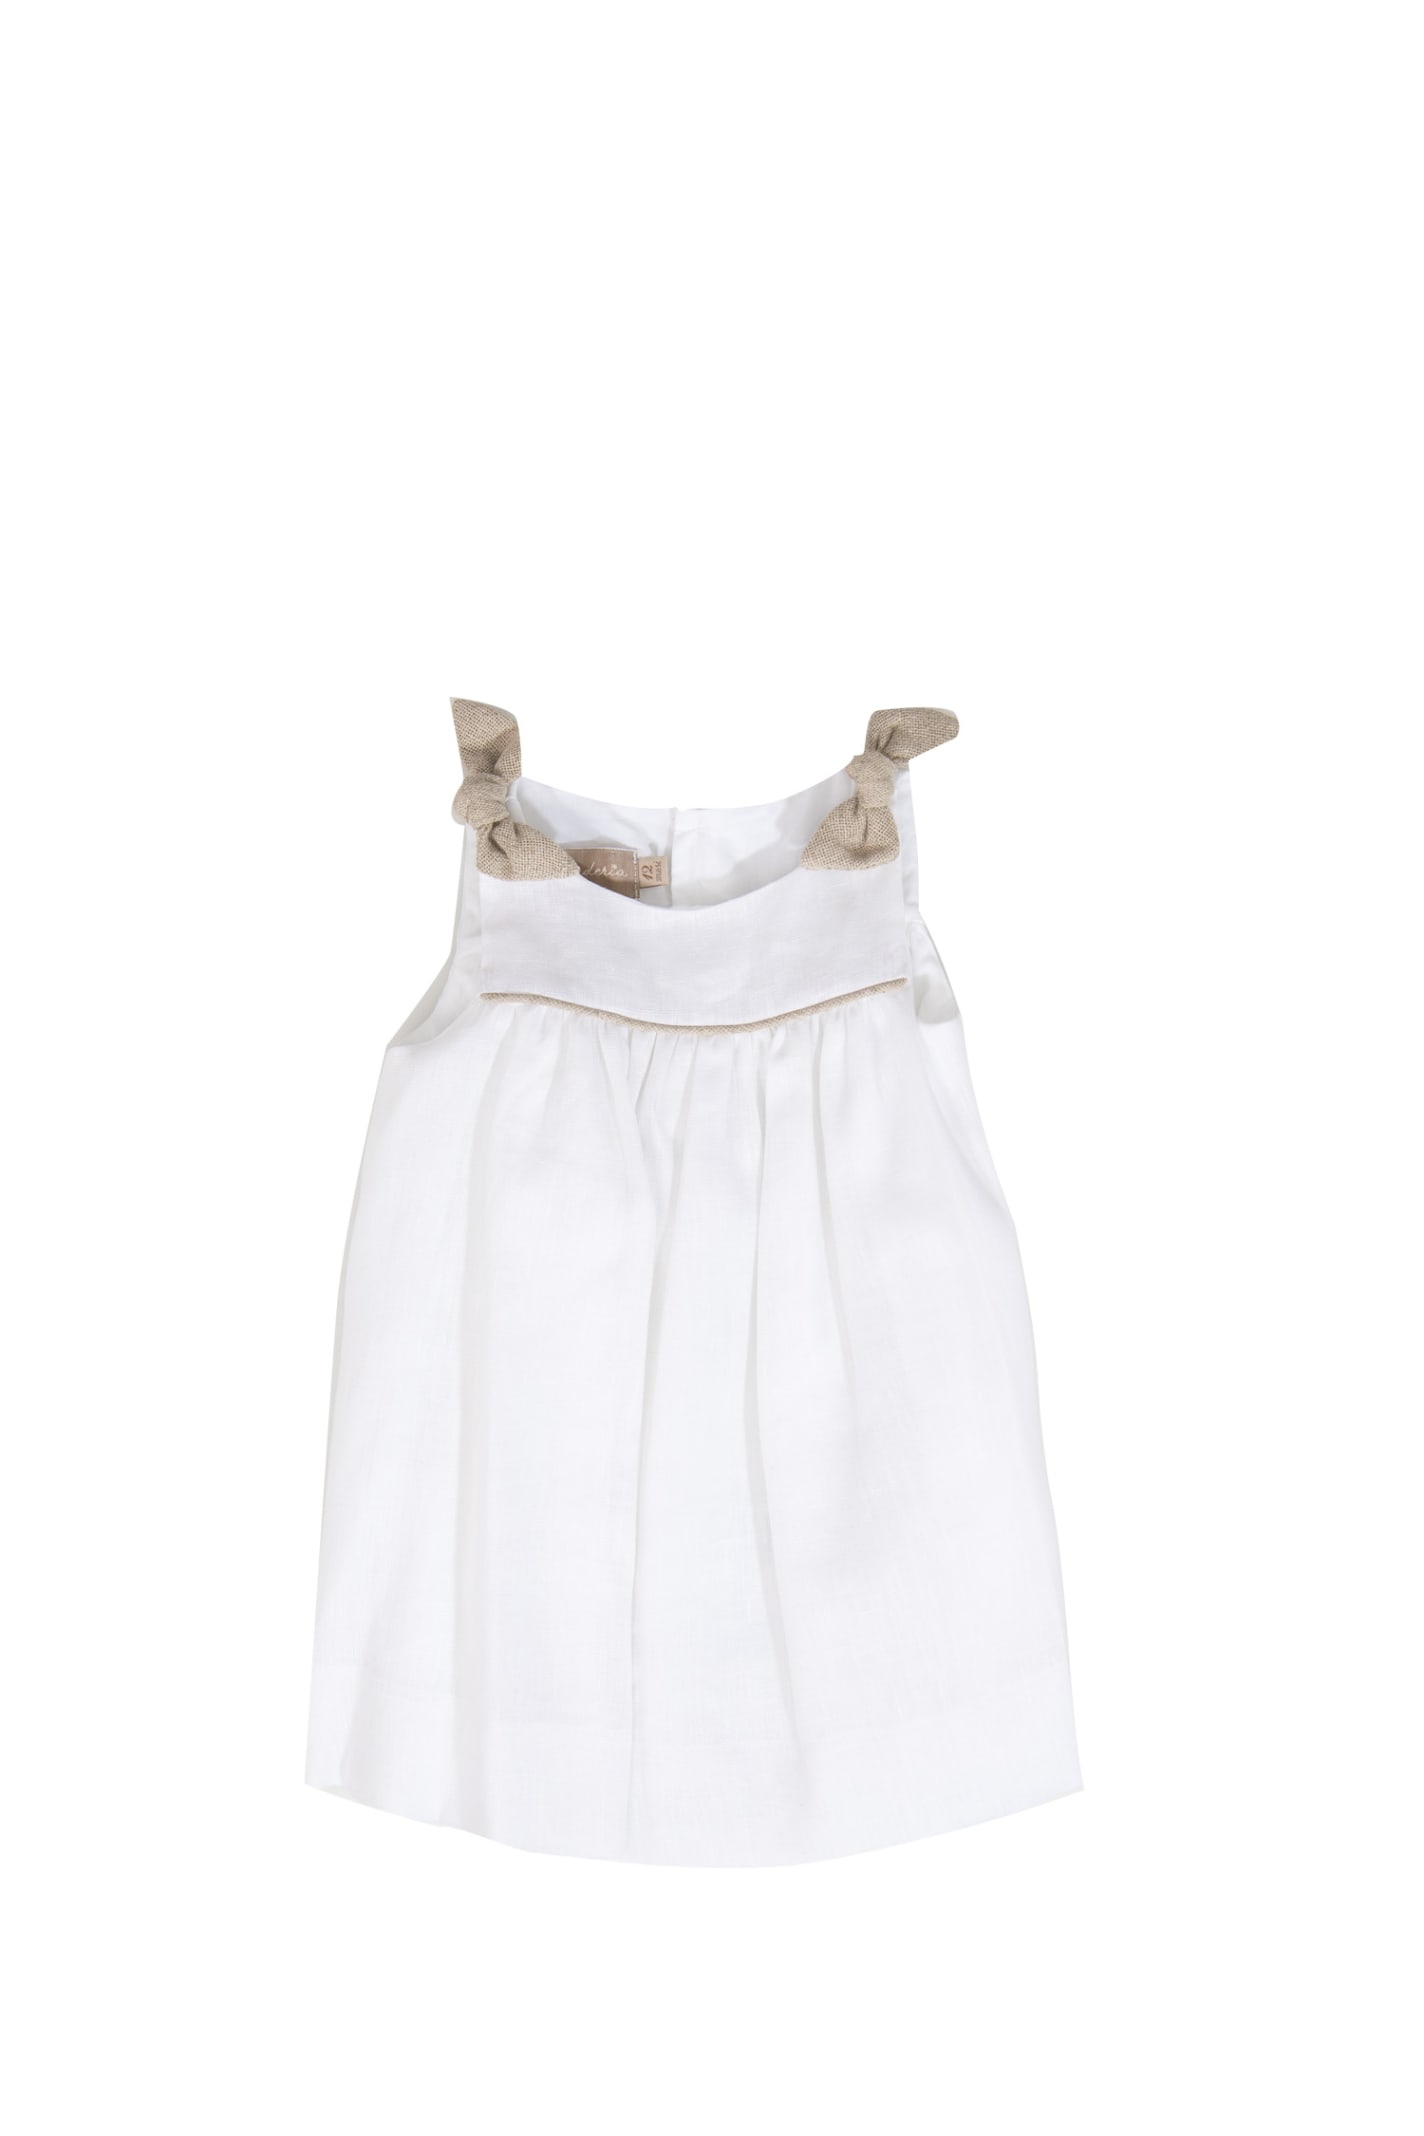 La Stupenderia Babies' Linen Dress In White